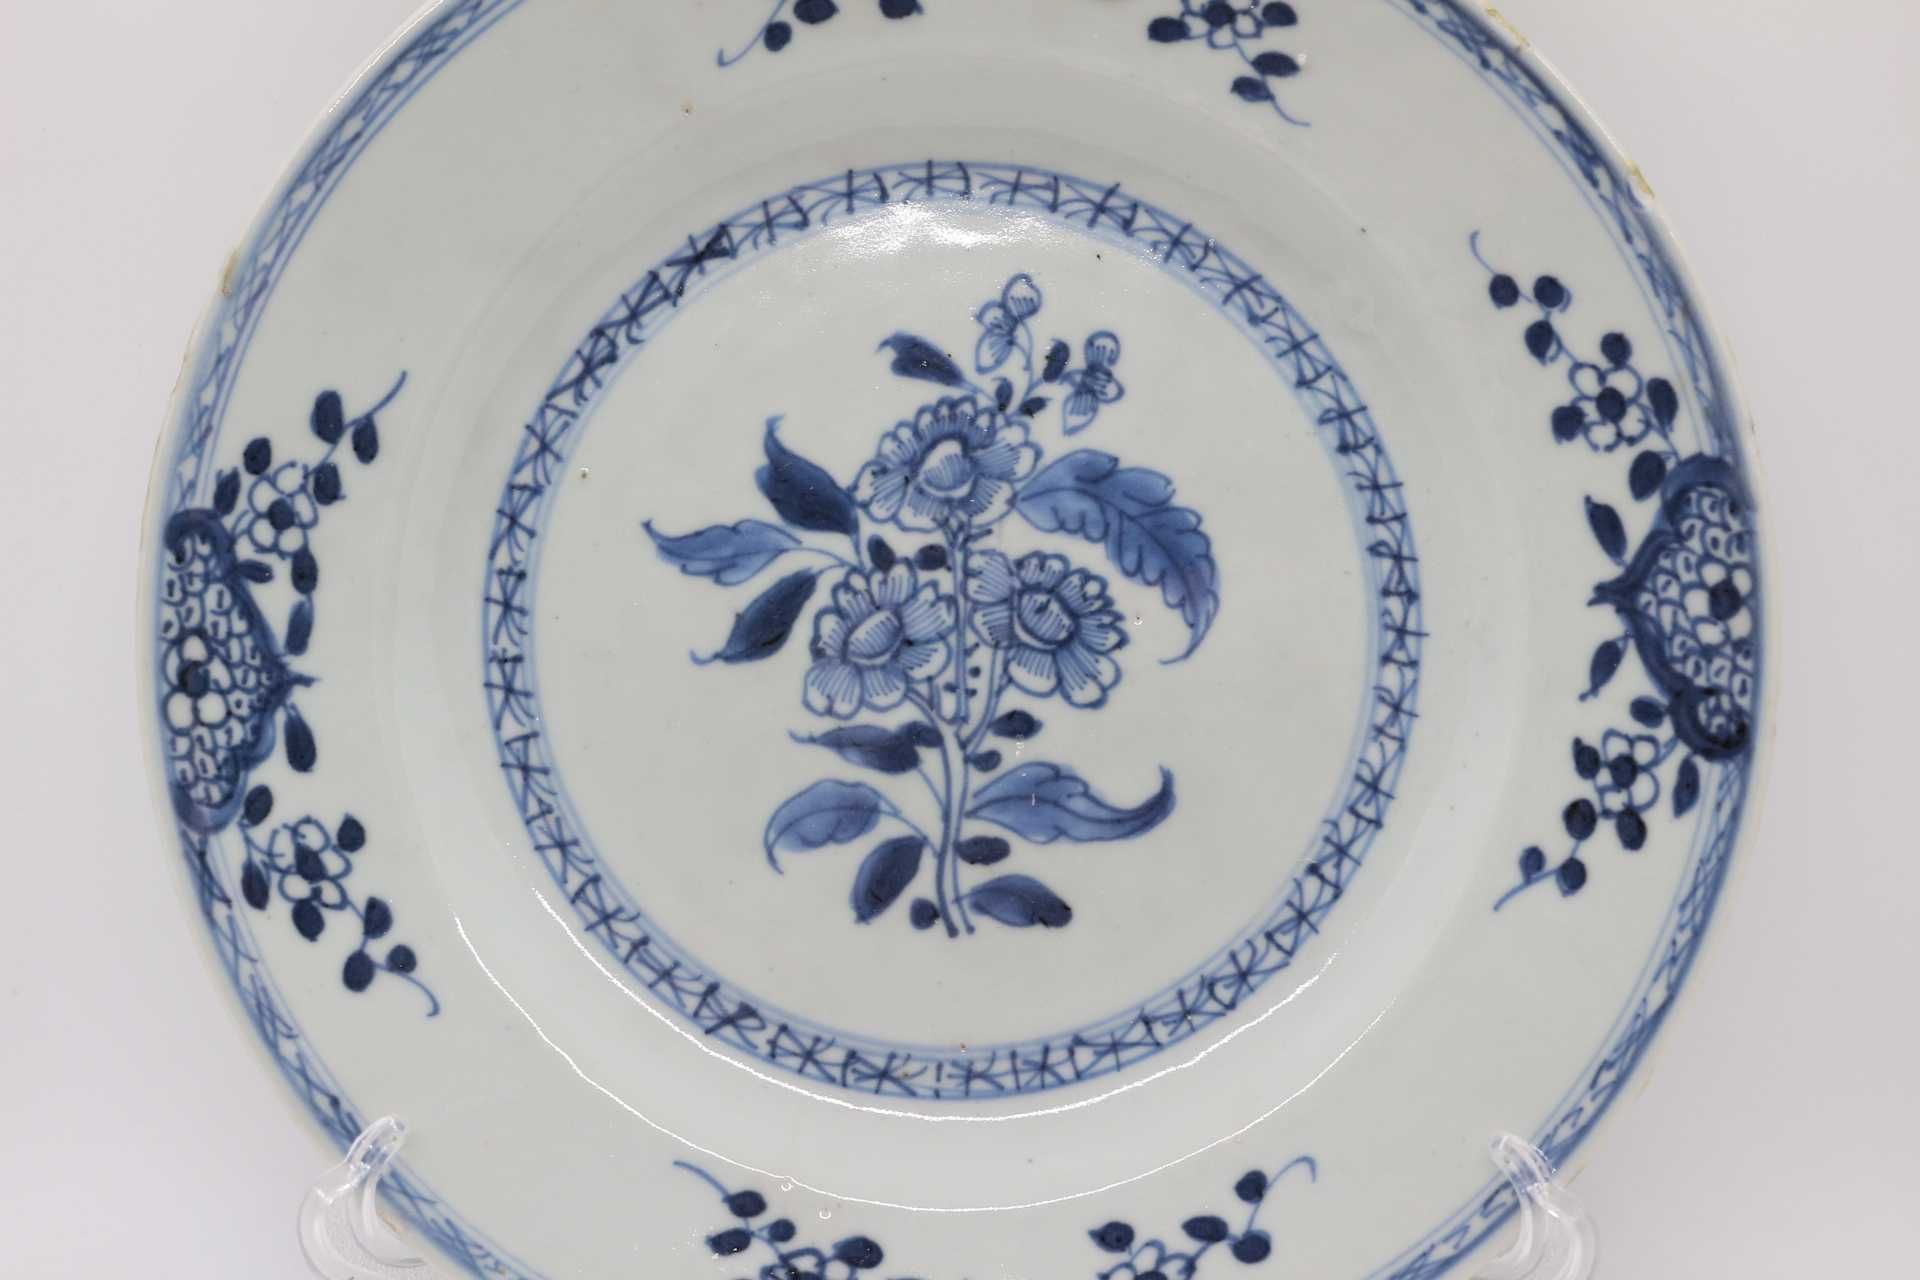 Prato porcelana Chinesa Floral Companhia das índias séc. XVIII/XIX